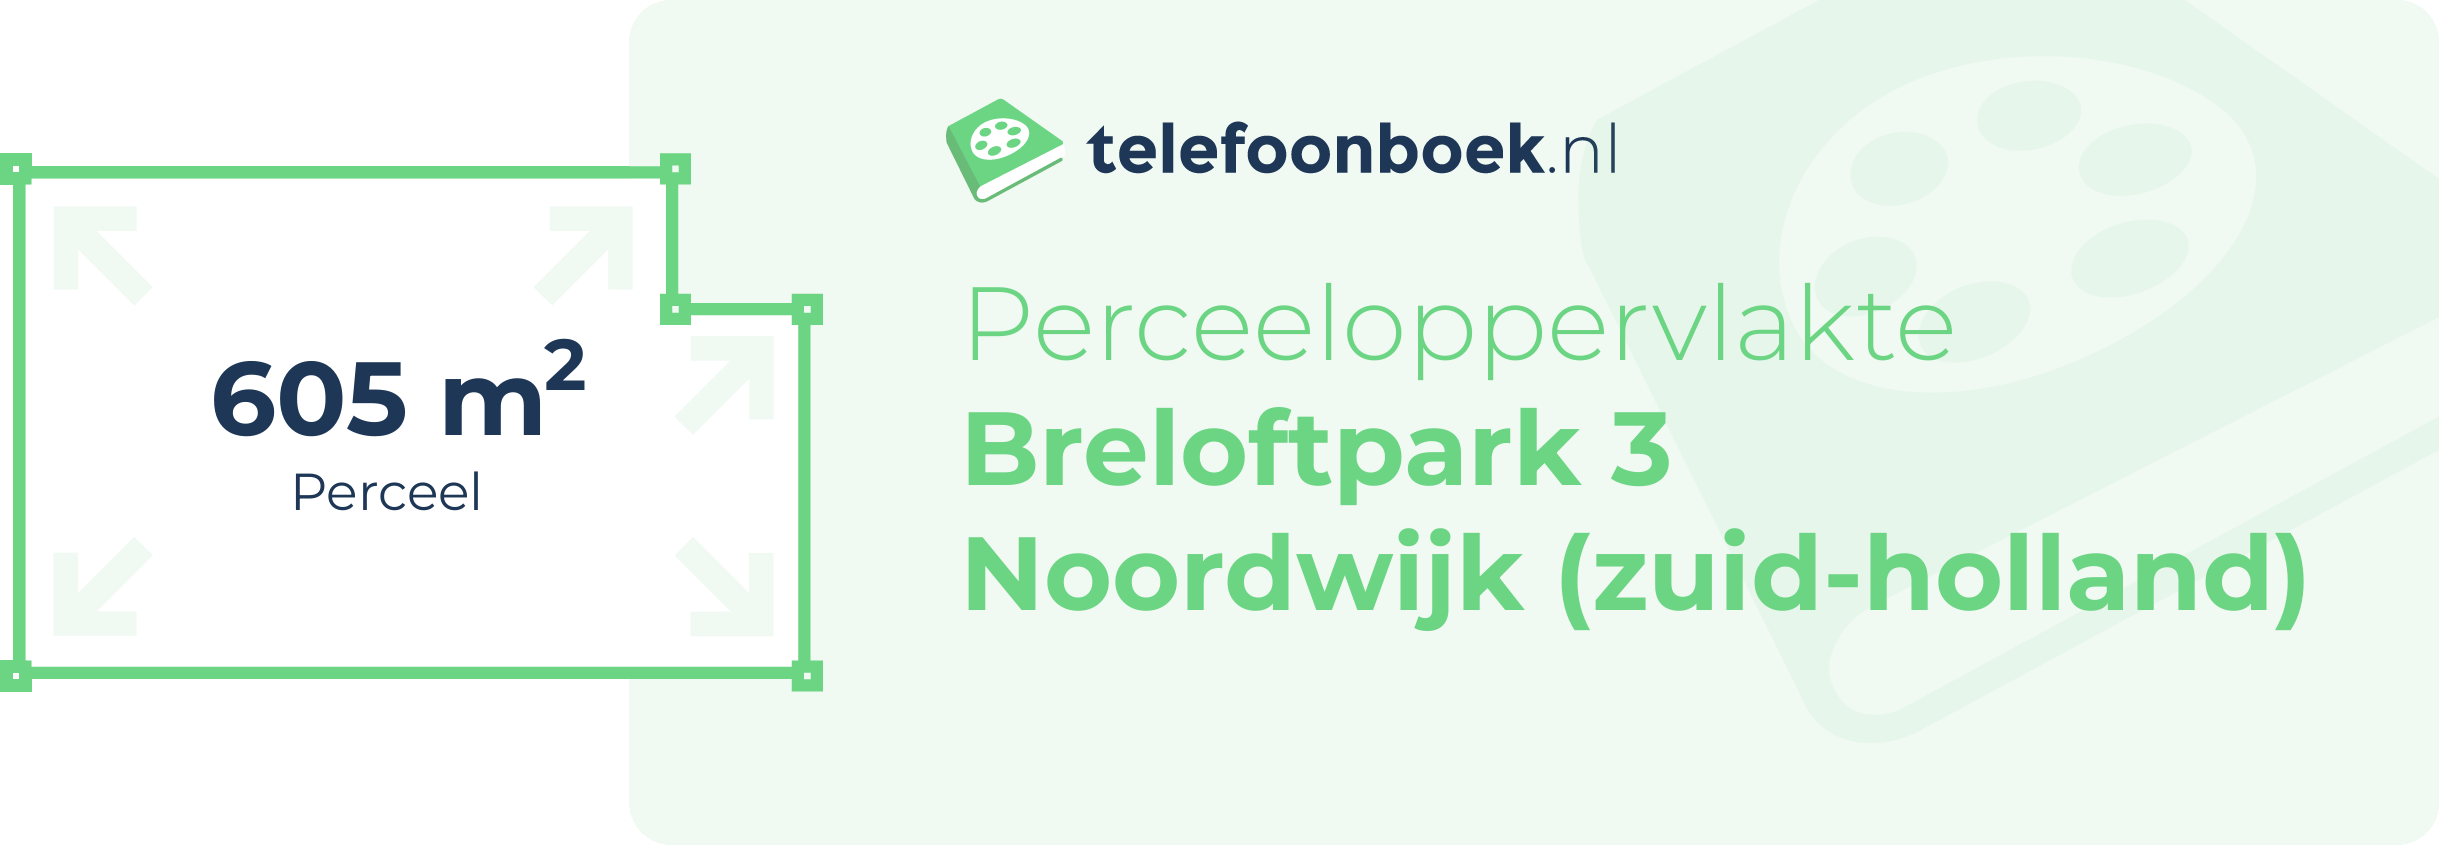 Perceeloppervlakte Breloftpark 3 Noordwijk (Zuid-Holland)